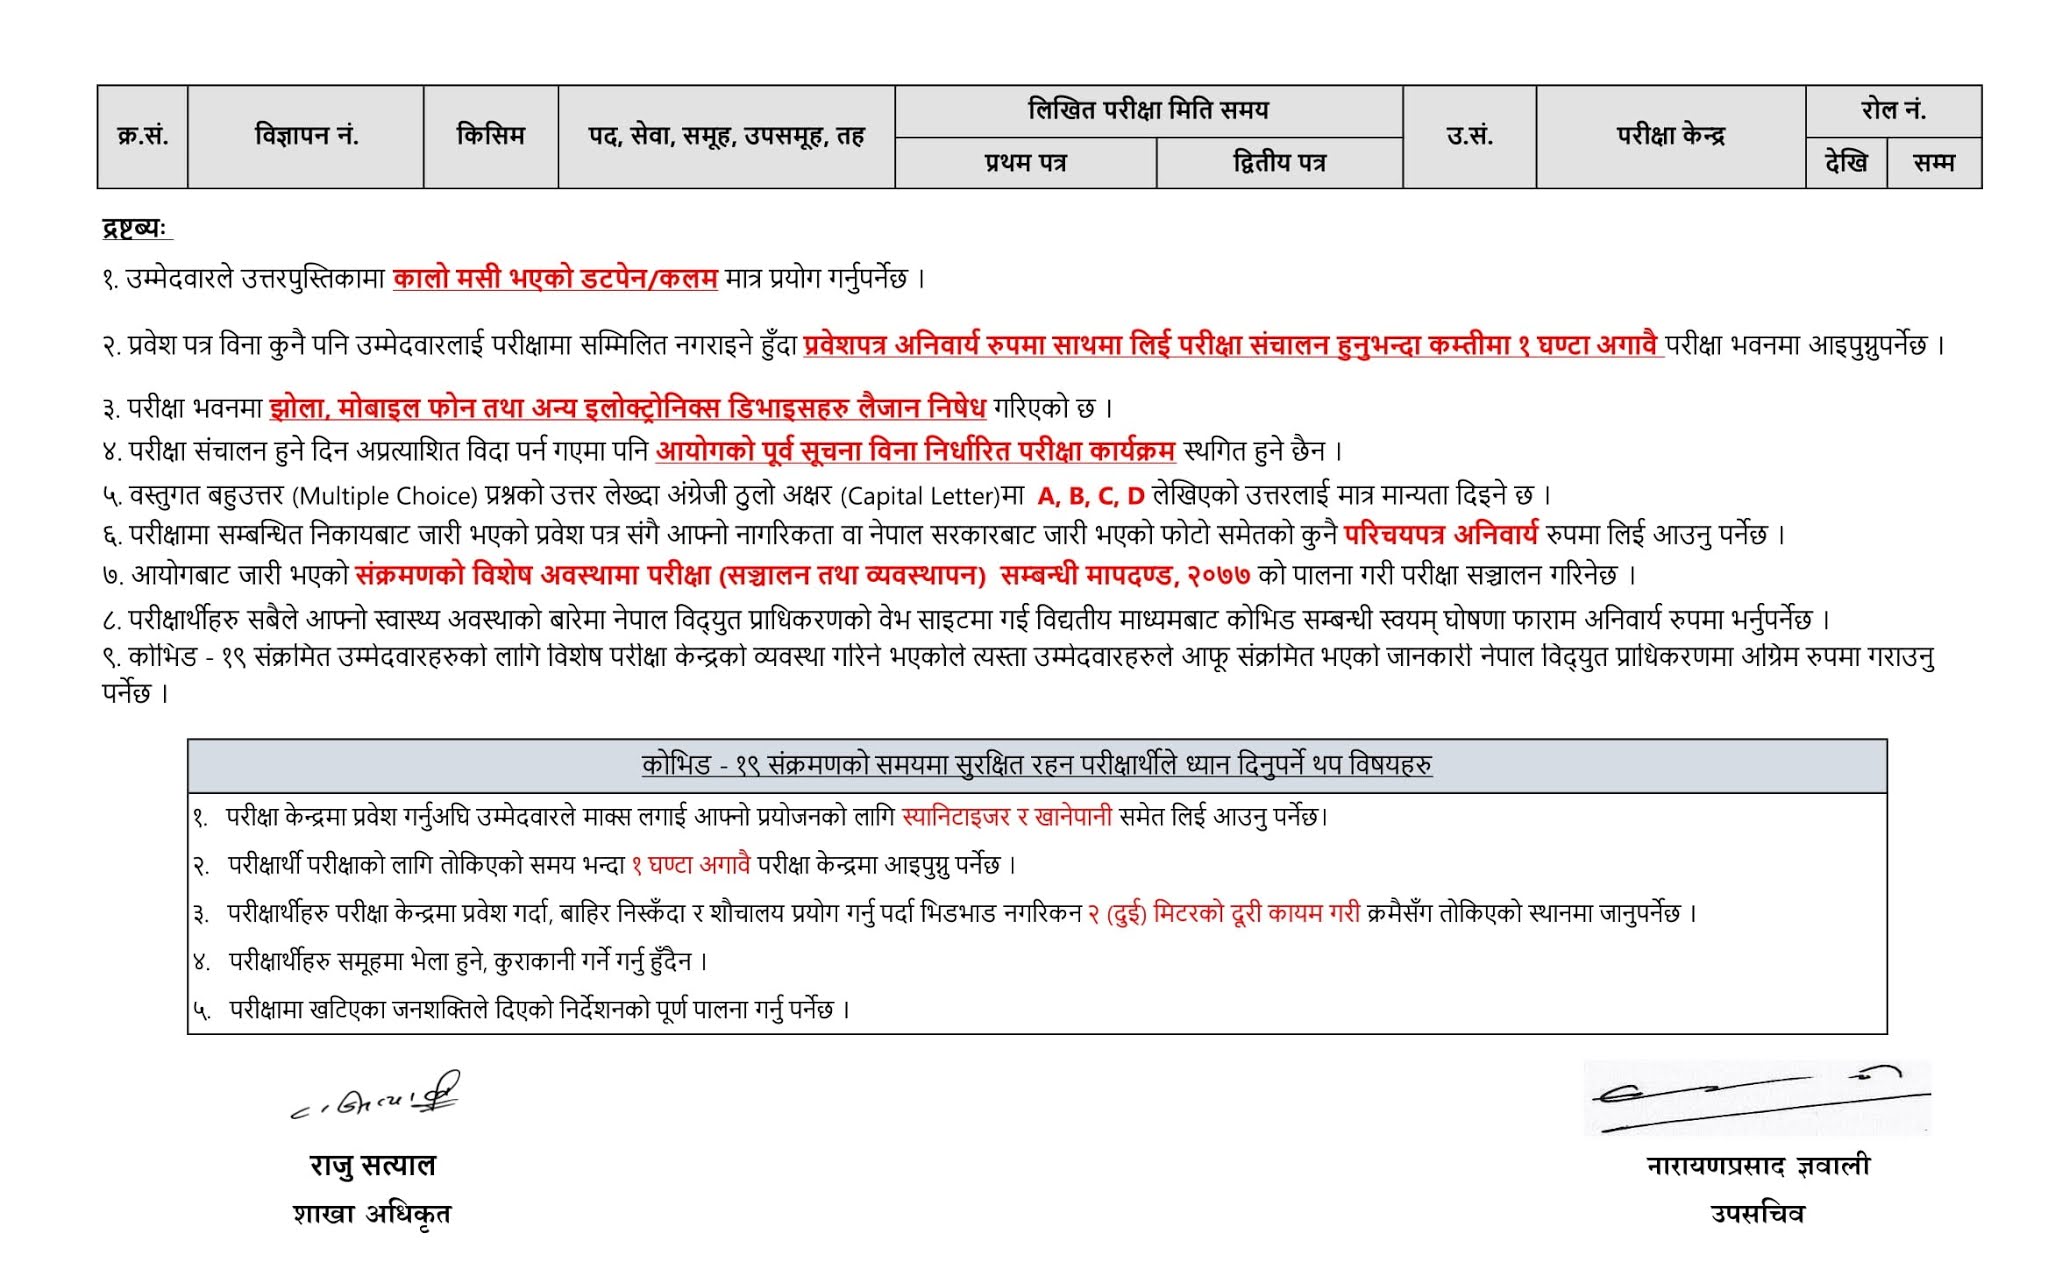 Nepal Electricity Authority (NEA) Written Exam Notice